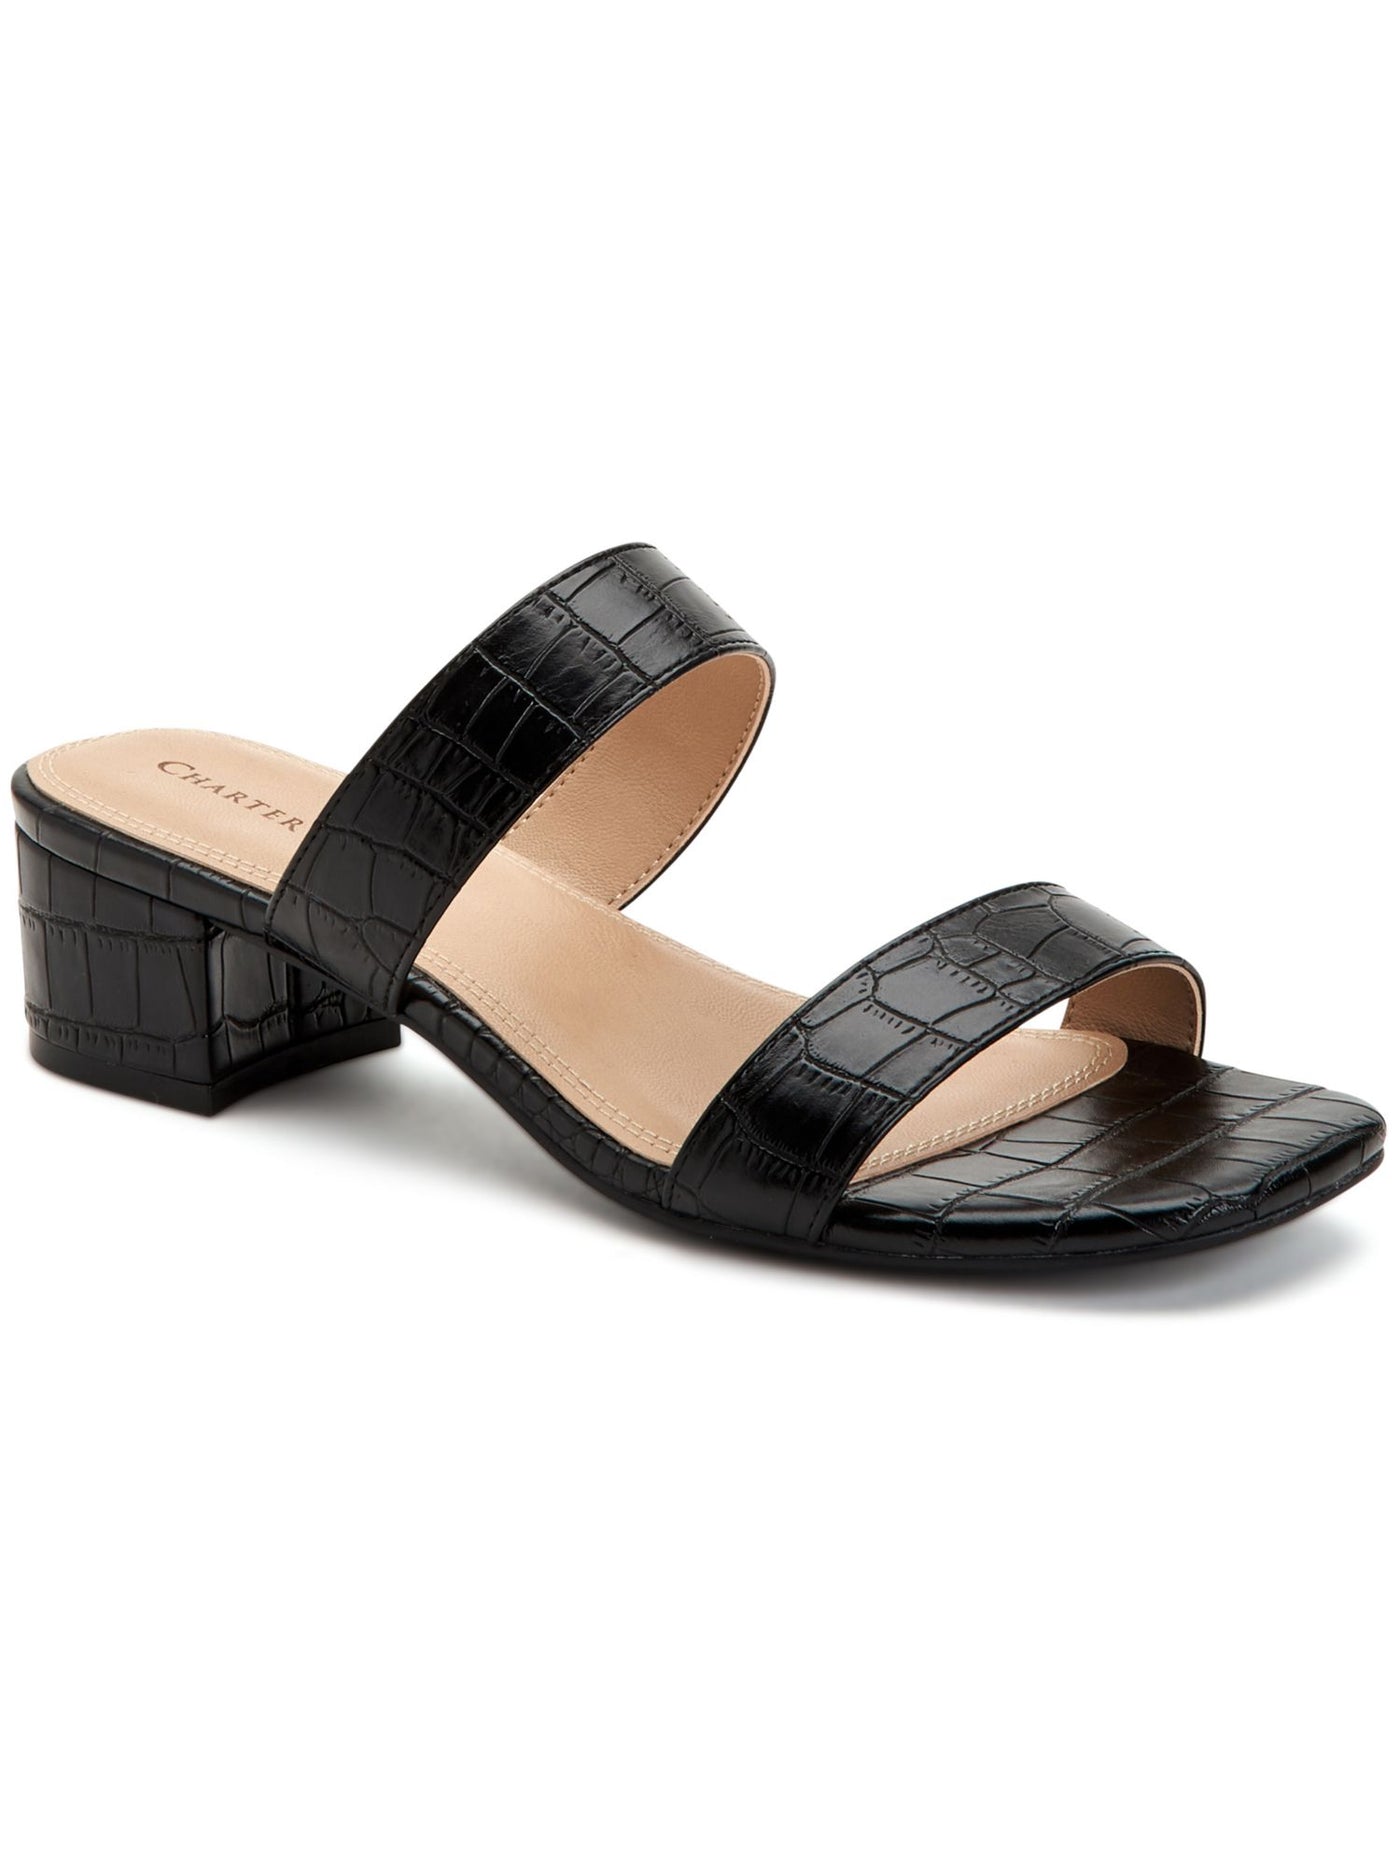 CHARTER CLUB Womens Black Crocodile Print Vernaa Square Toe Block Heel Slip On Dress Sandals Shoes 8.5 M